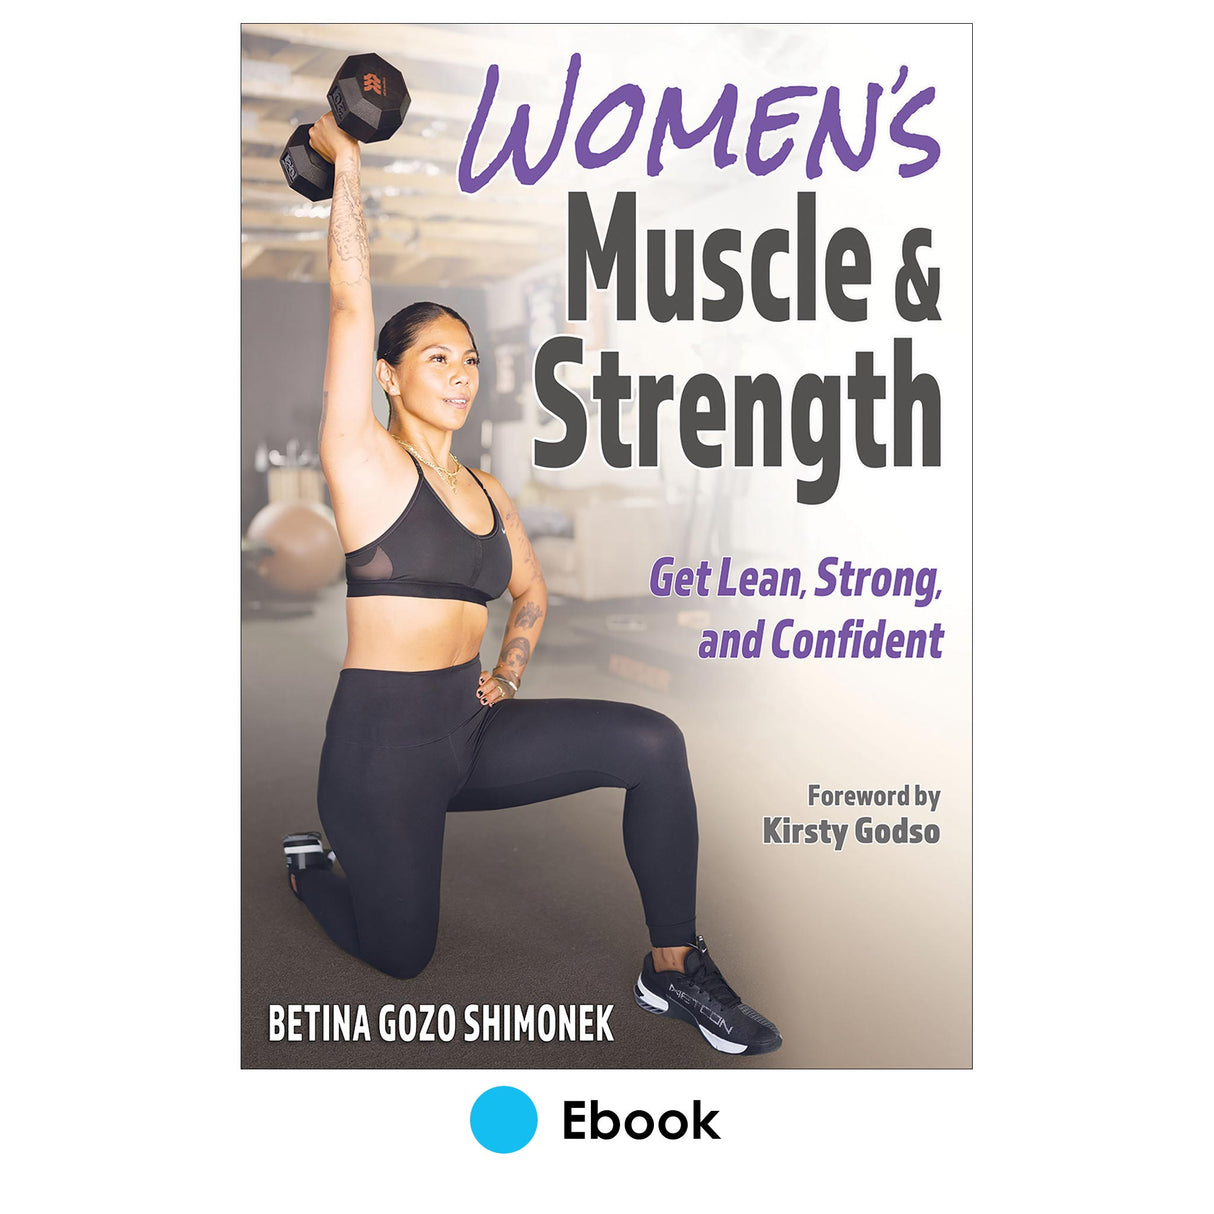 Women’s Muscle & Strength epub